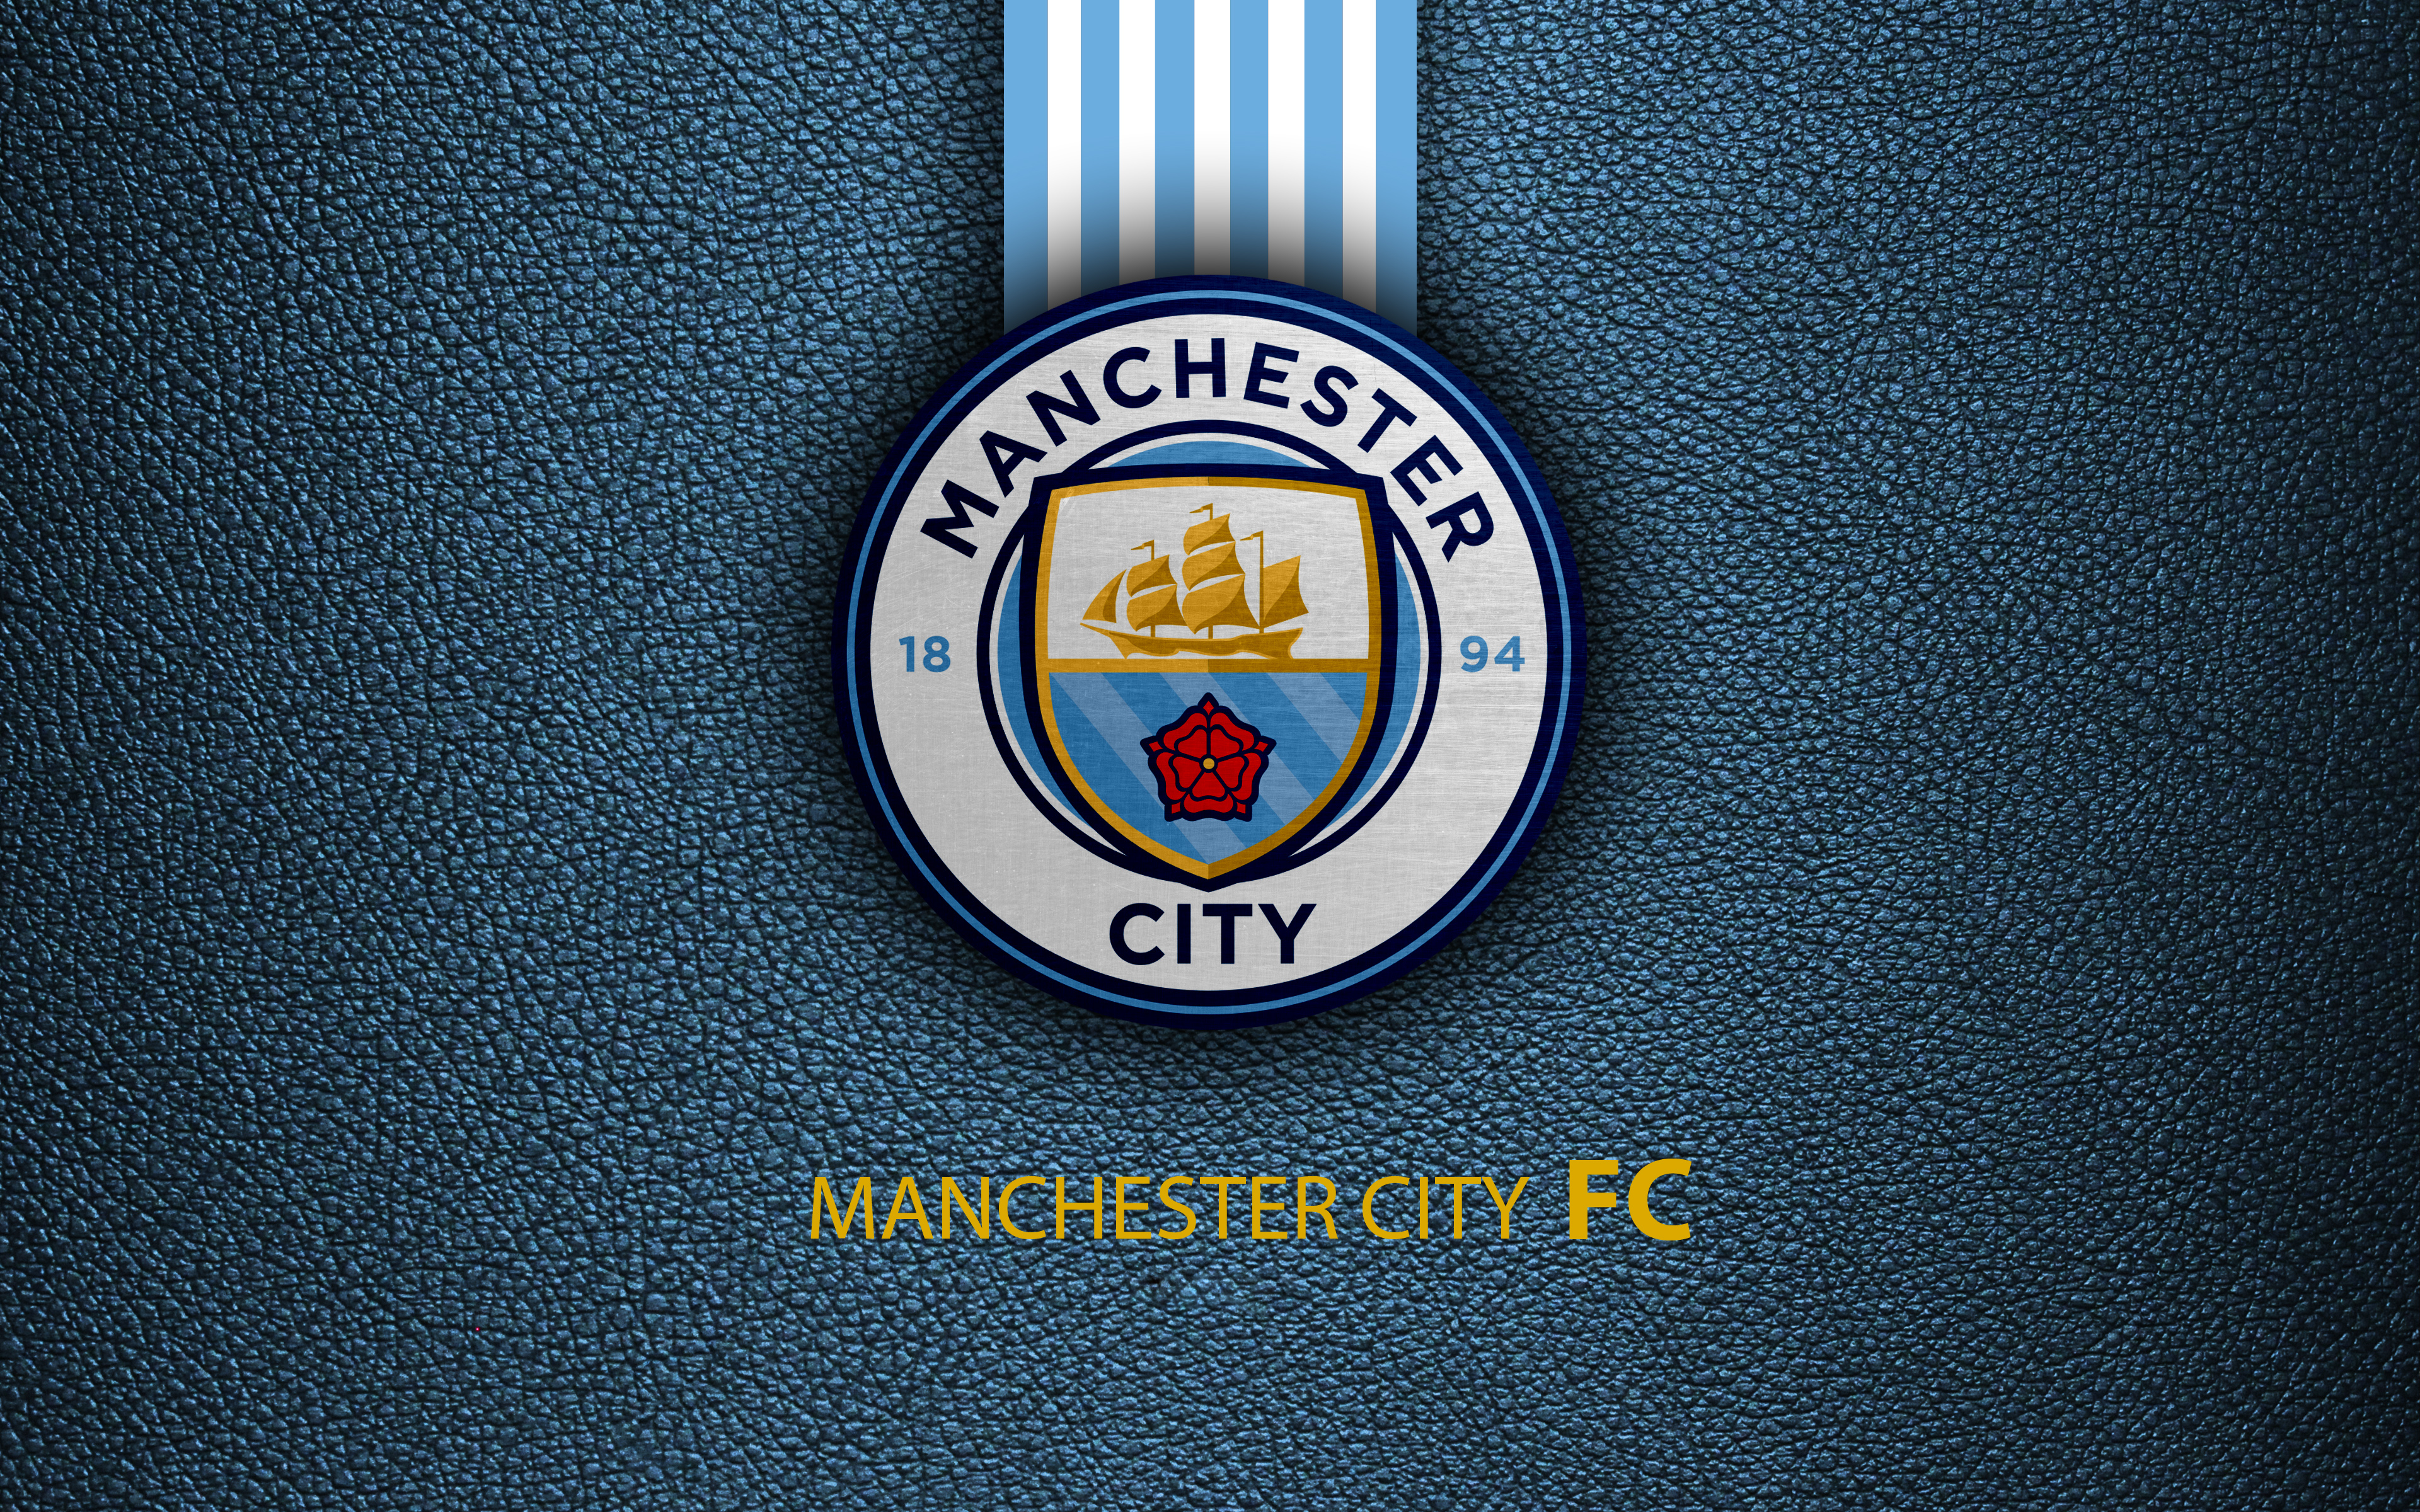 Manchester City Logo 4k Ultra HD Wallpaper Background Image